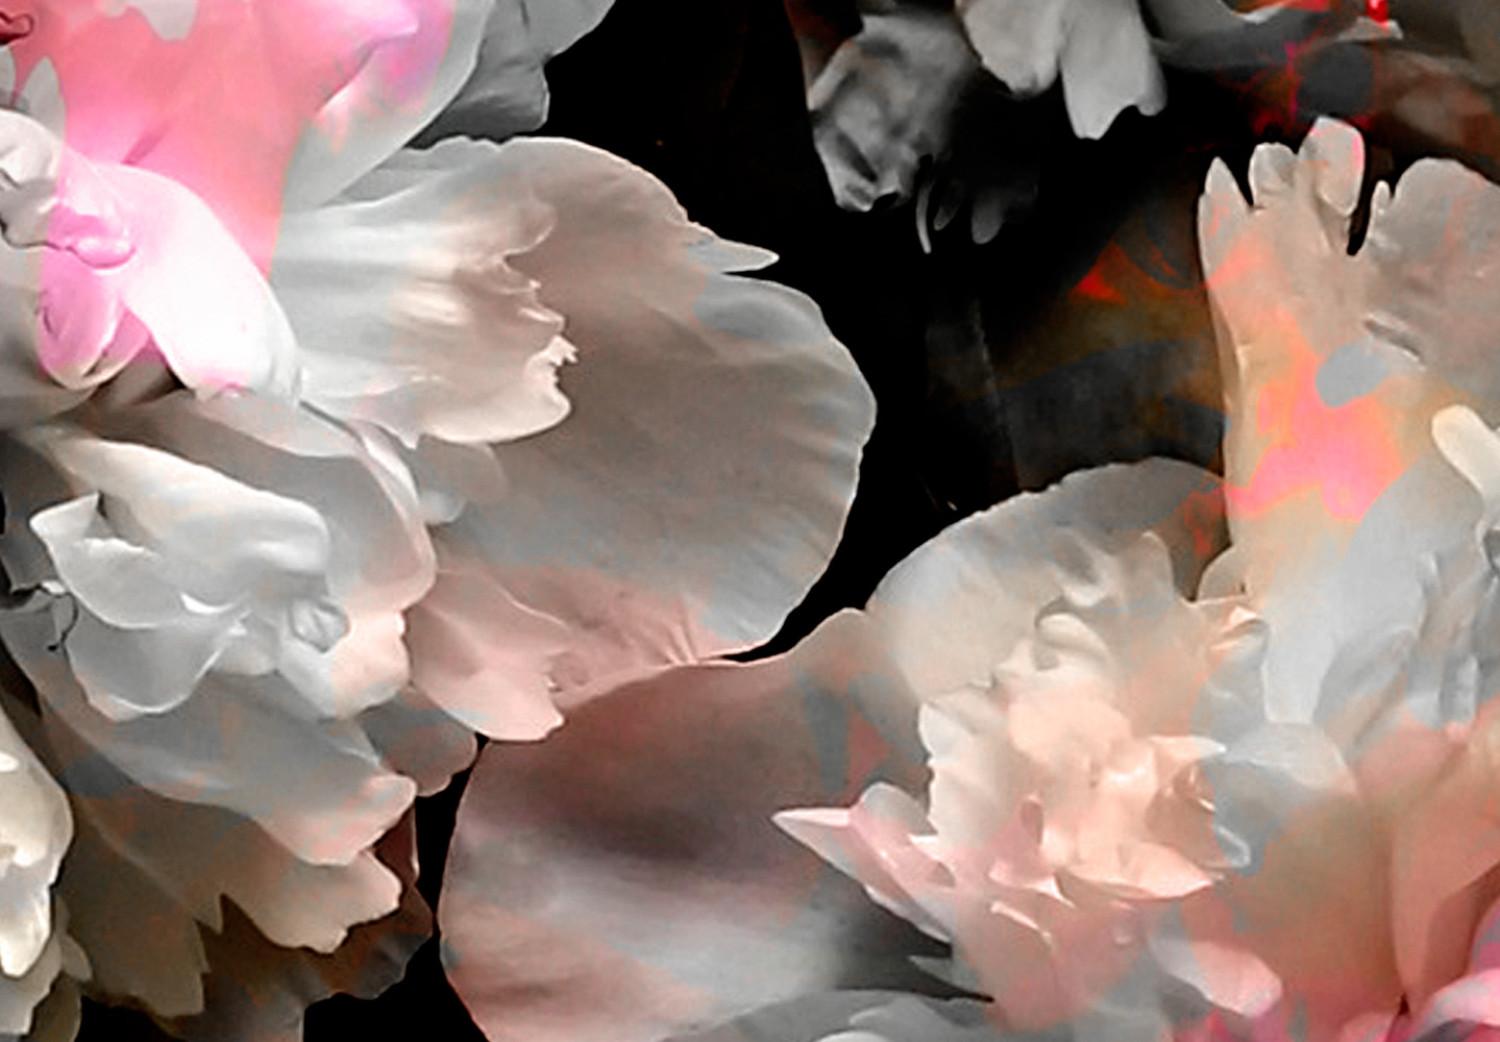 Set de poster Ramo oscuridad: flores colores fondo negro intenso